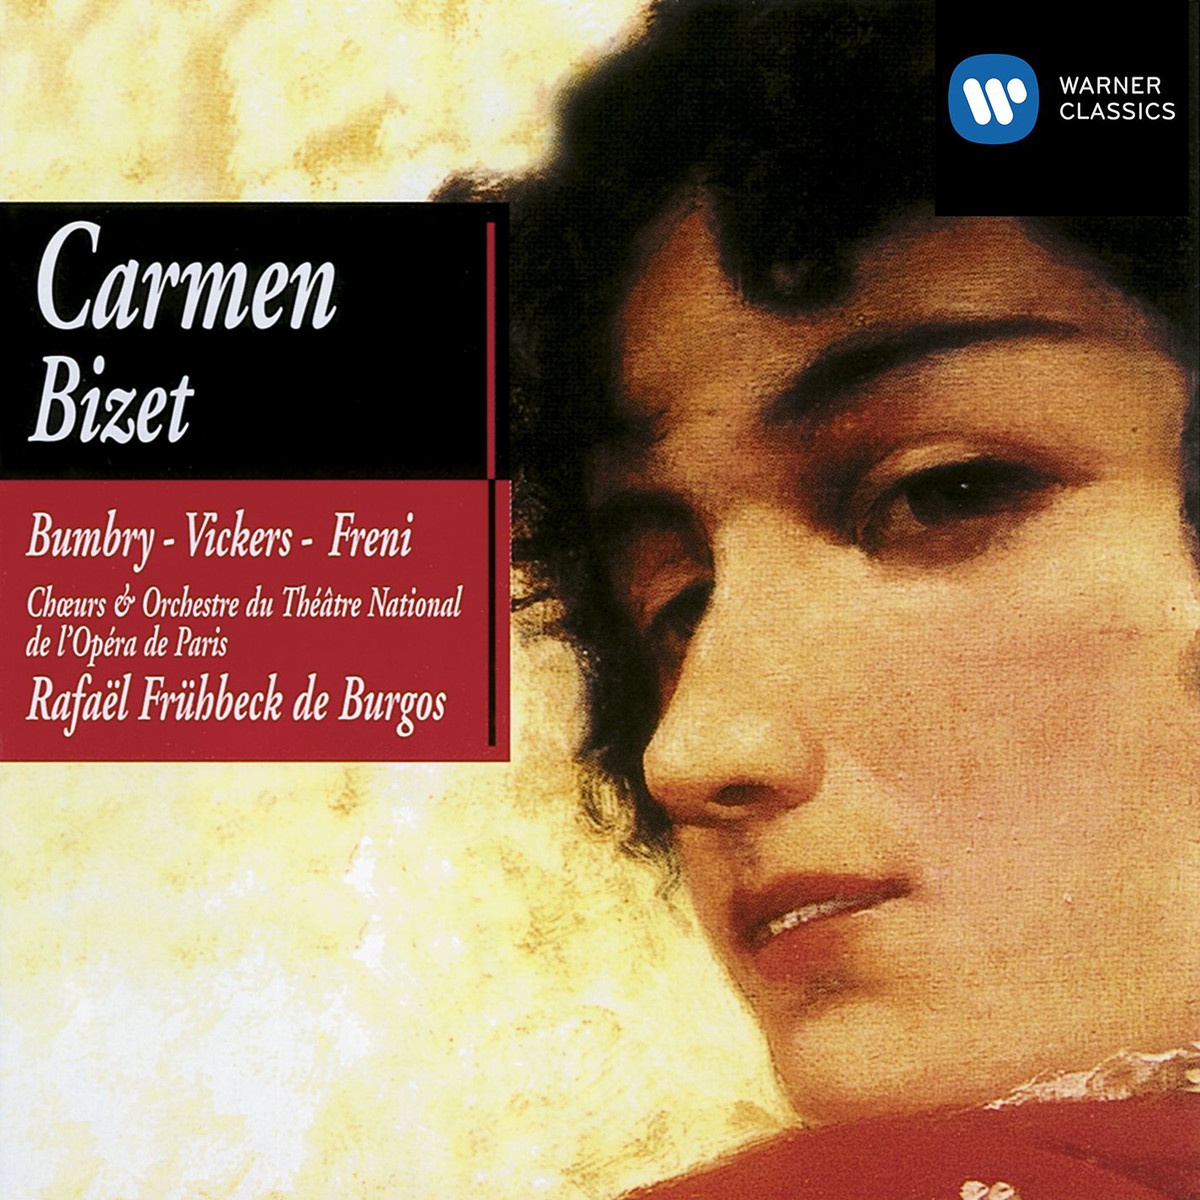 Carmen (1990 Digital Remaster), ACT 2: Votre toast (Toreador's Song)